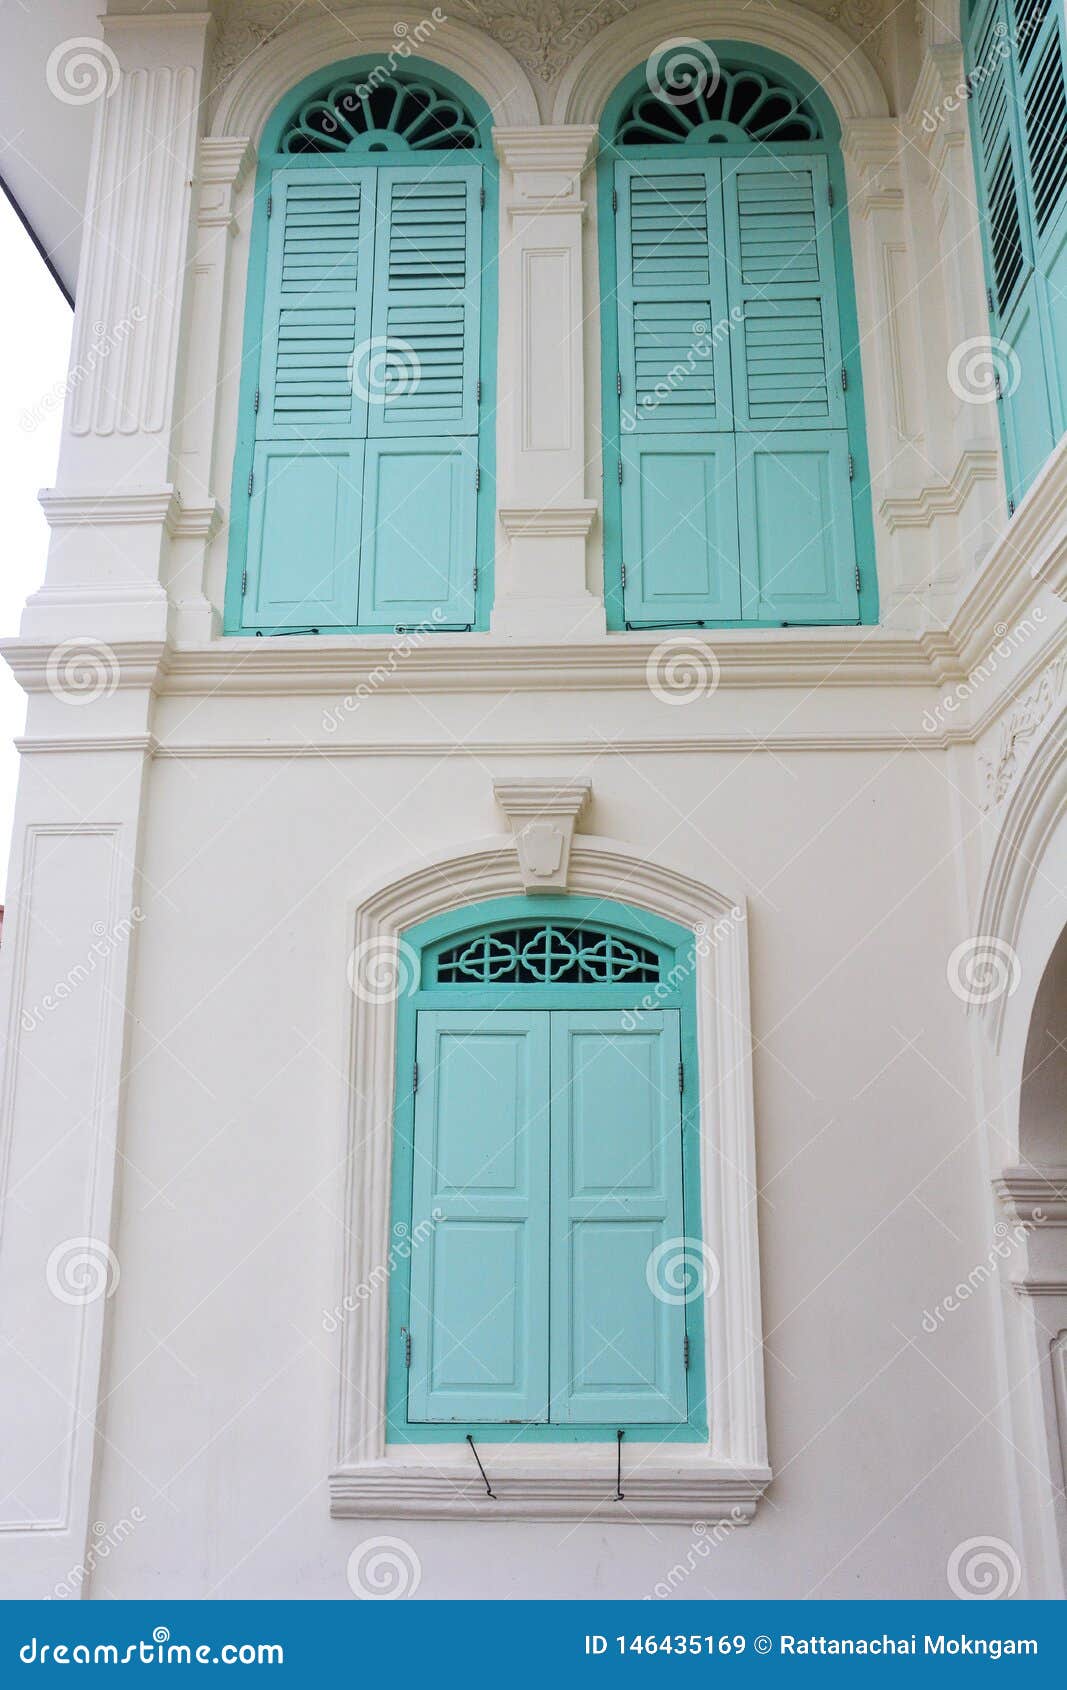 closed green window in chino-portuguese style